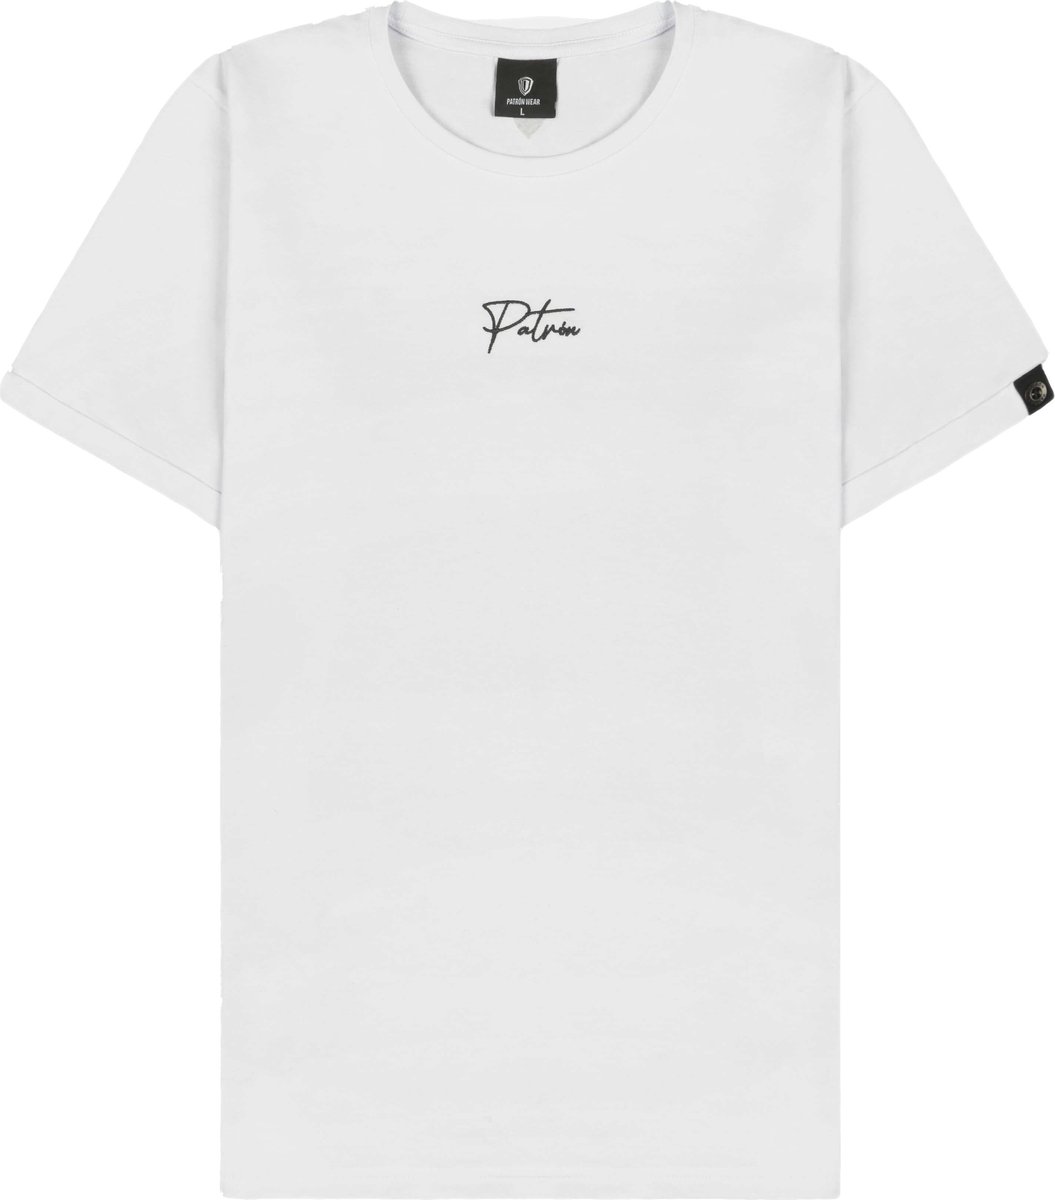 Patrón Wear - Emilio T-shirt White/Black - Maat XS